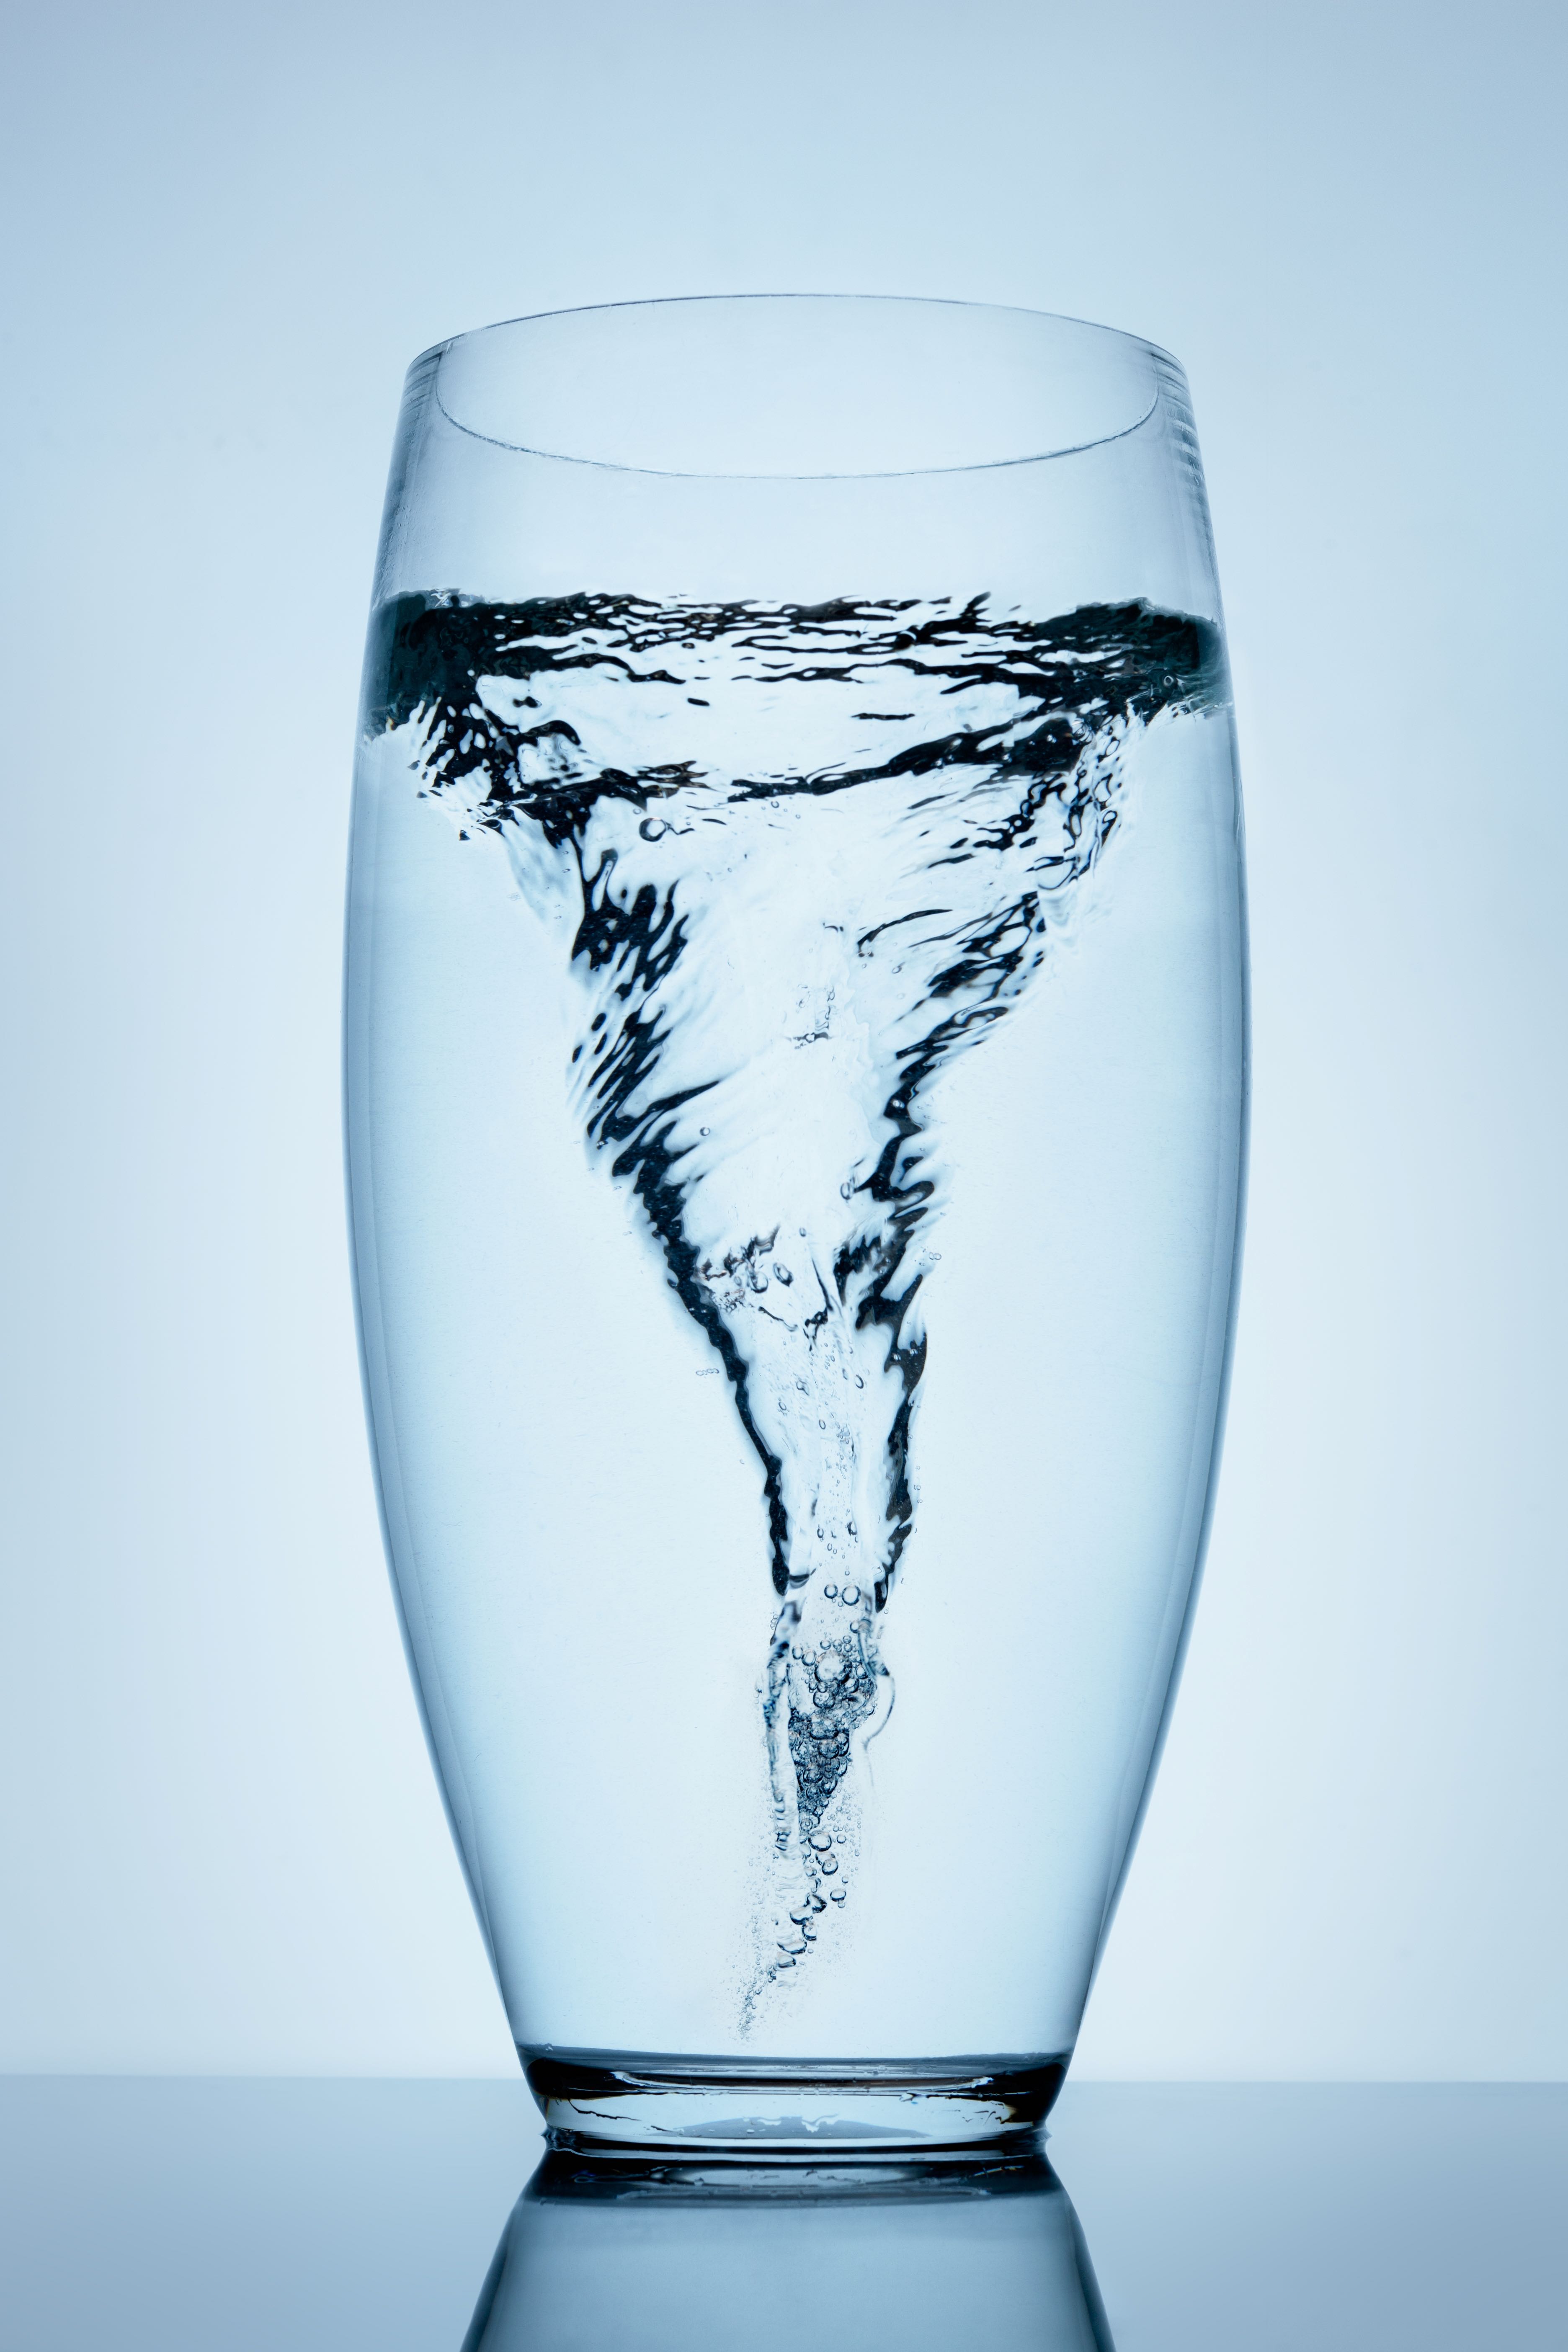 https://healthindoors.com/wp-content/uploads/2013/02/water-vortex-in-glass-small.jpg